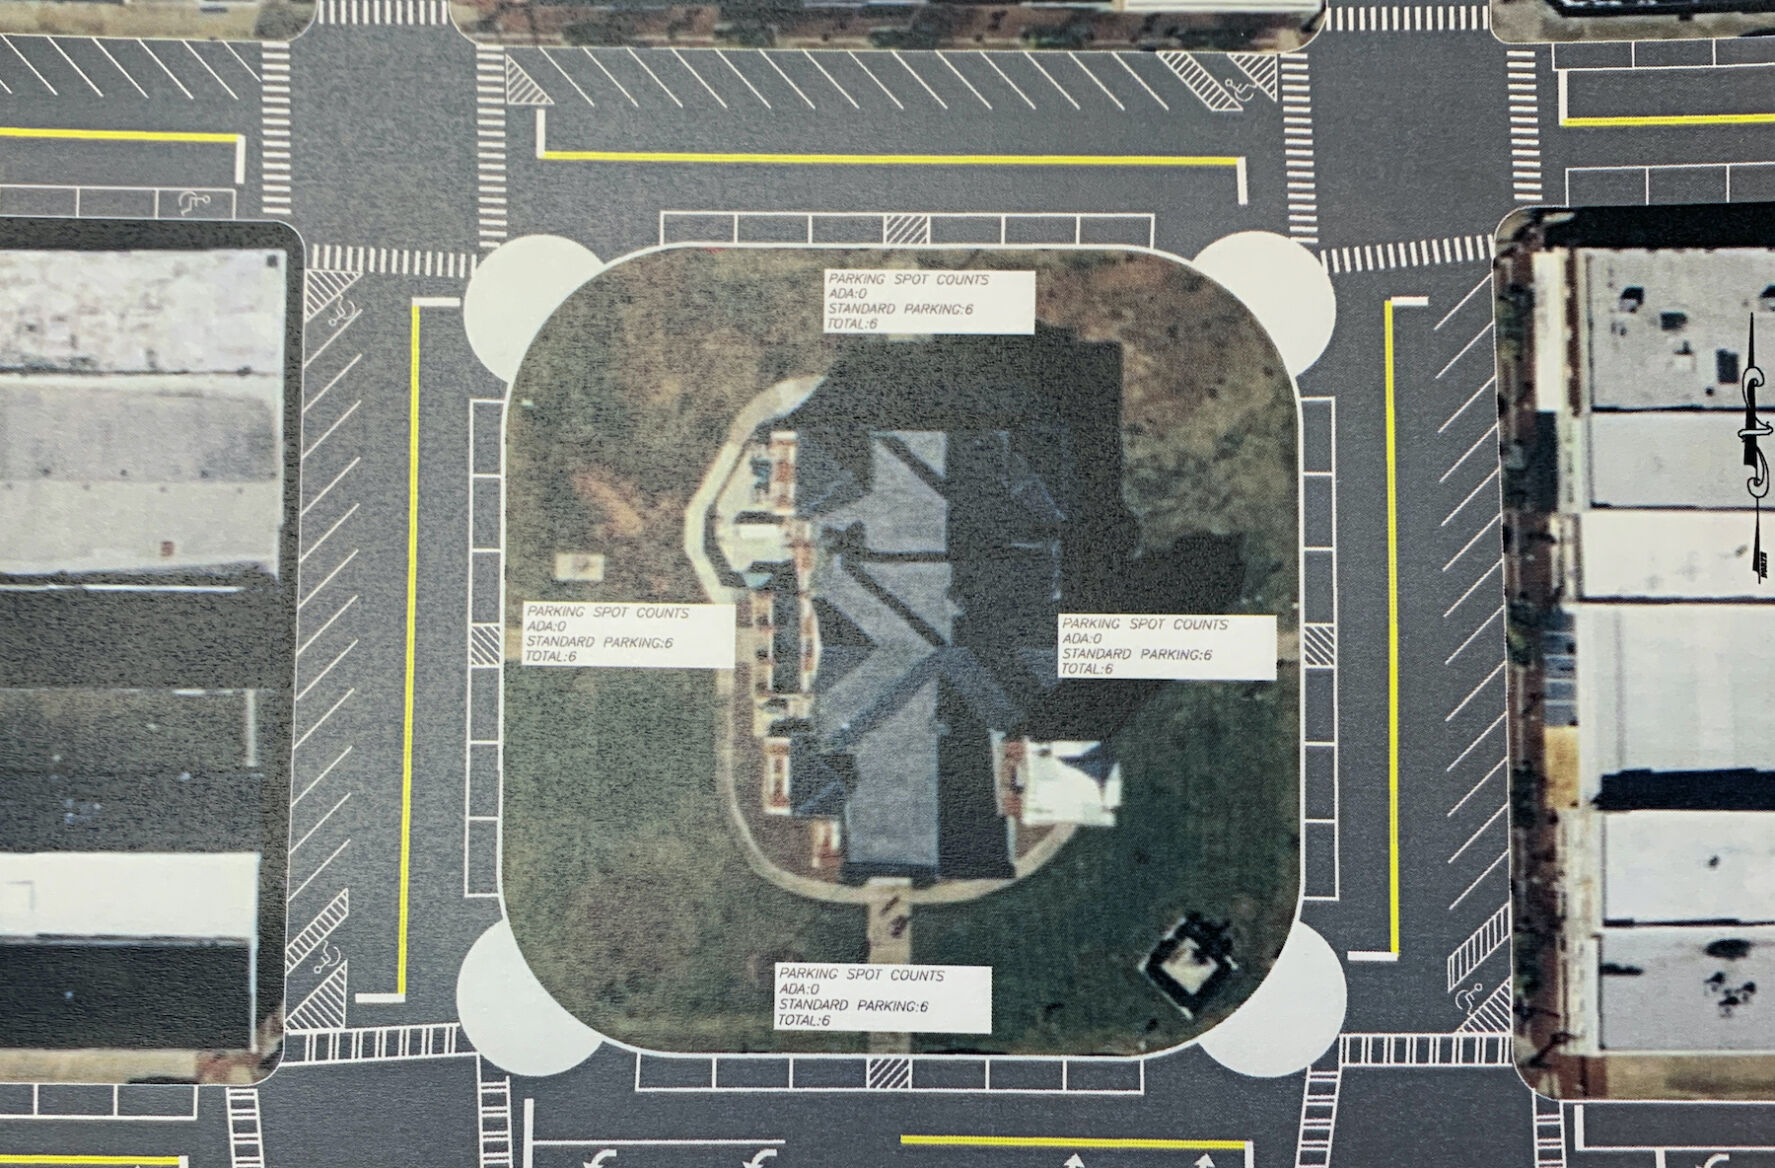 Parallel parking spaces to surround historic courthouse, News jacksonprogress-argus